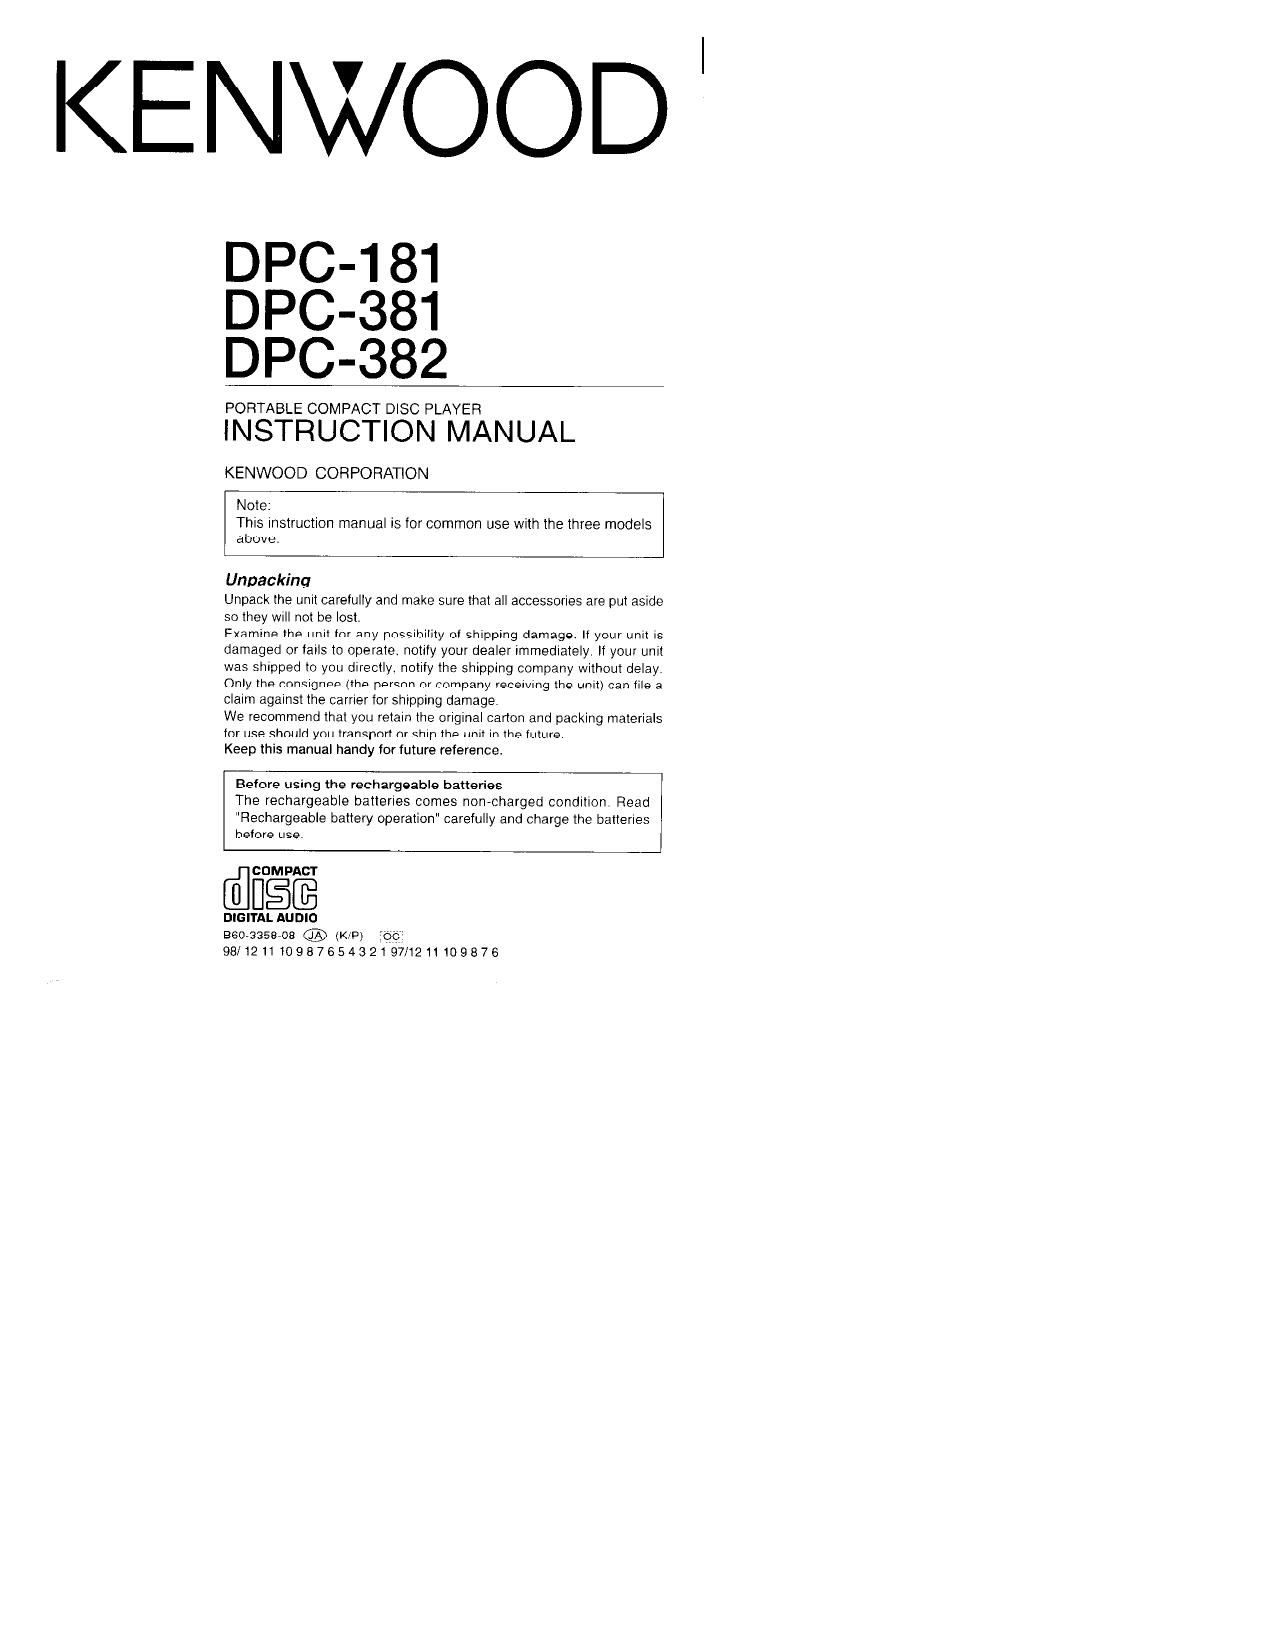 Kenwood DPC 181 Owners Manual